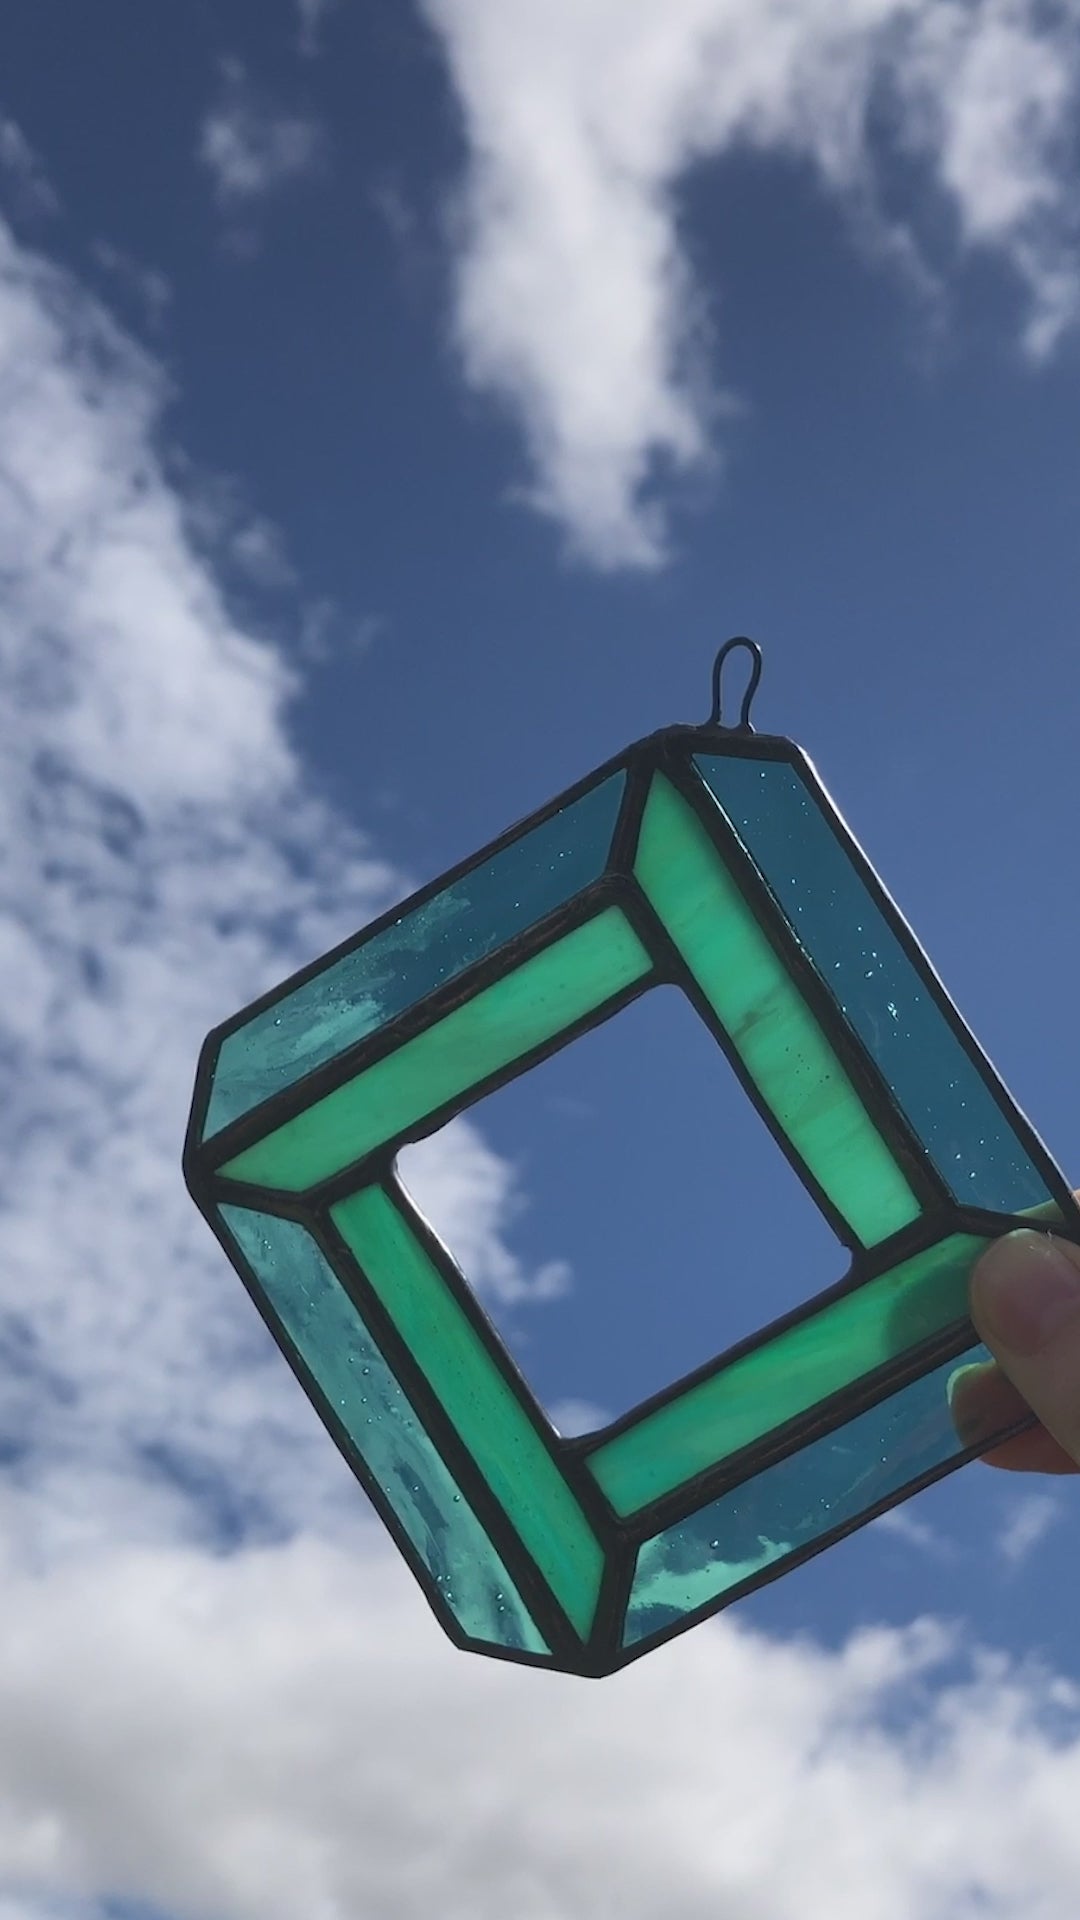 short video of image of teal geometric diamond glass suncatcher against a sunny sky